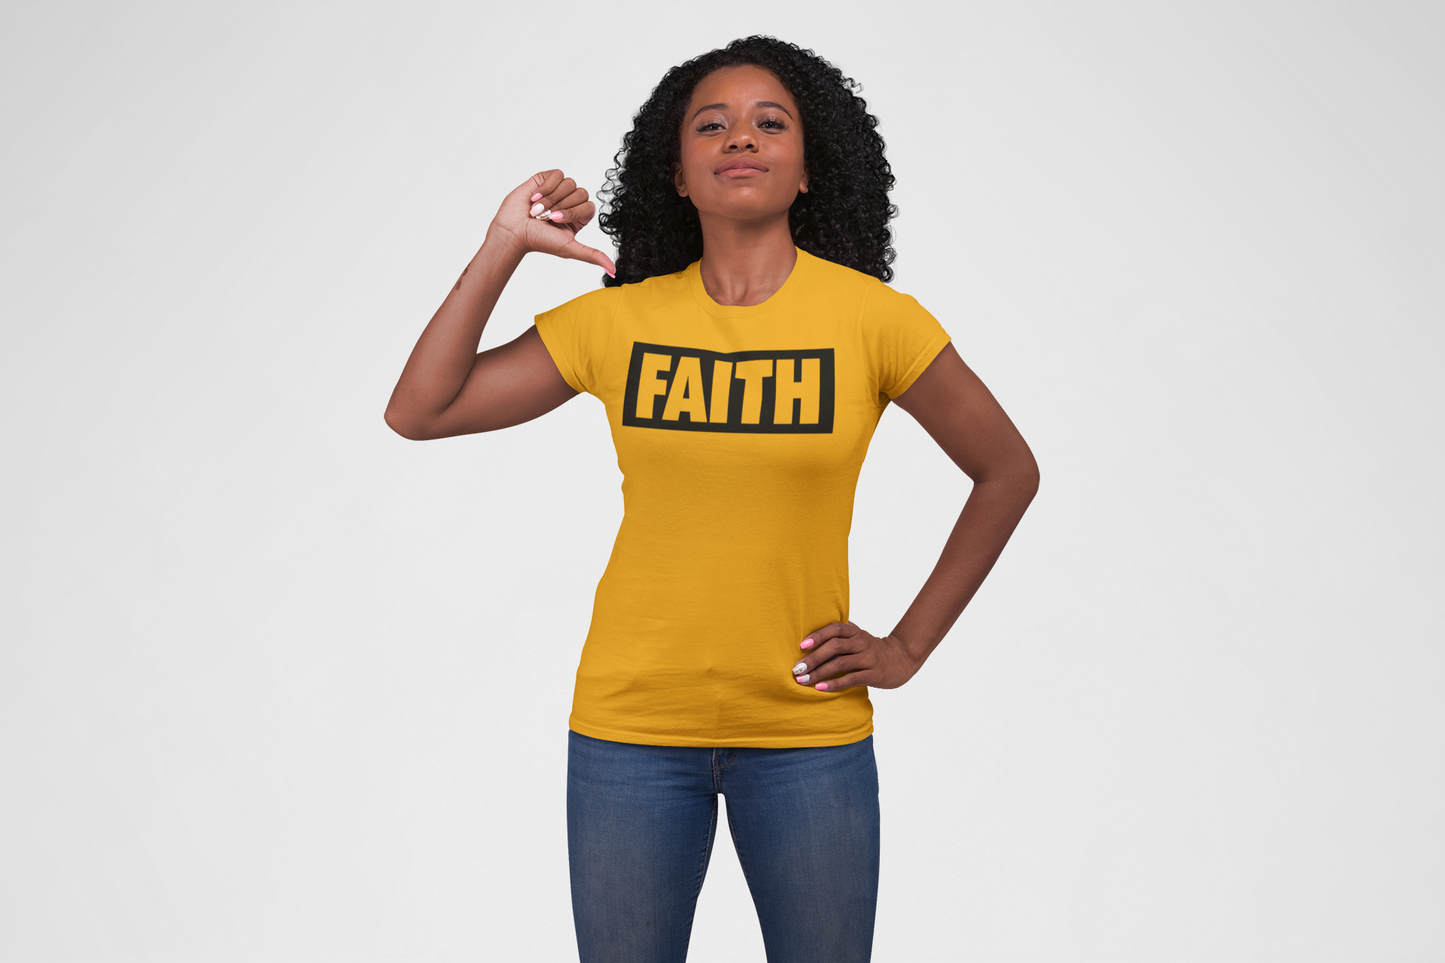 FAITH Women's T-shirt